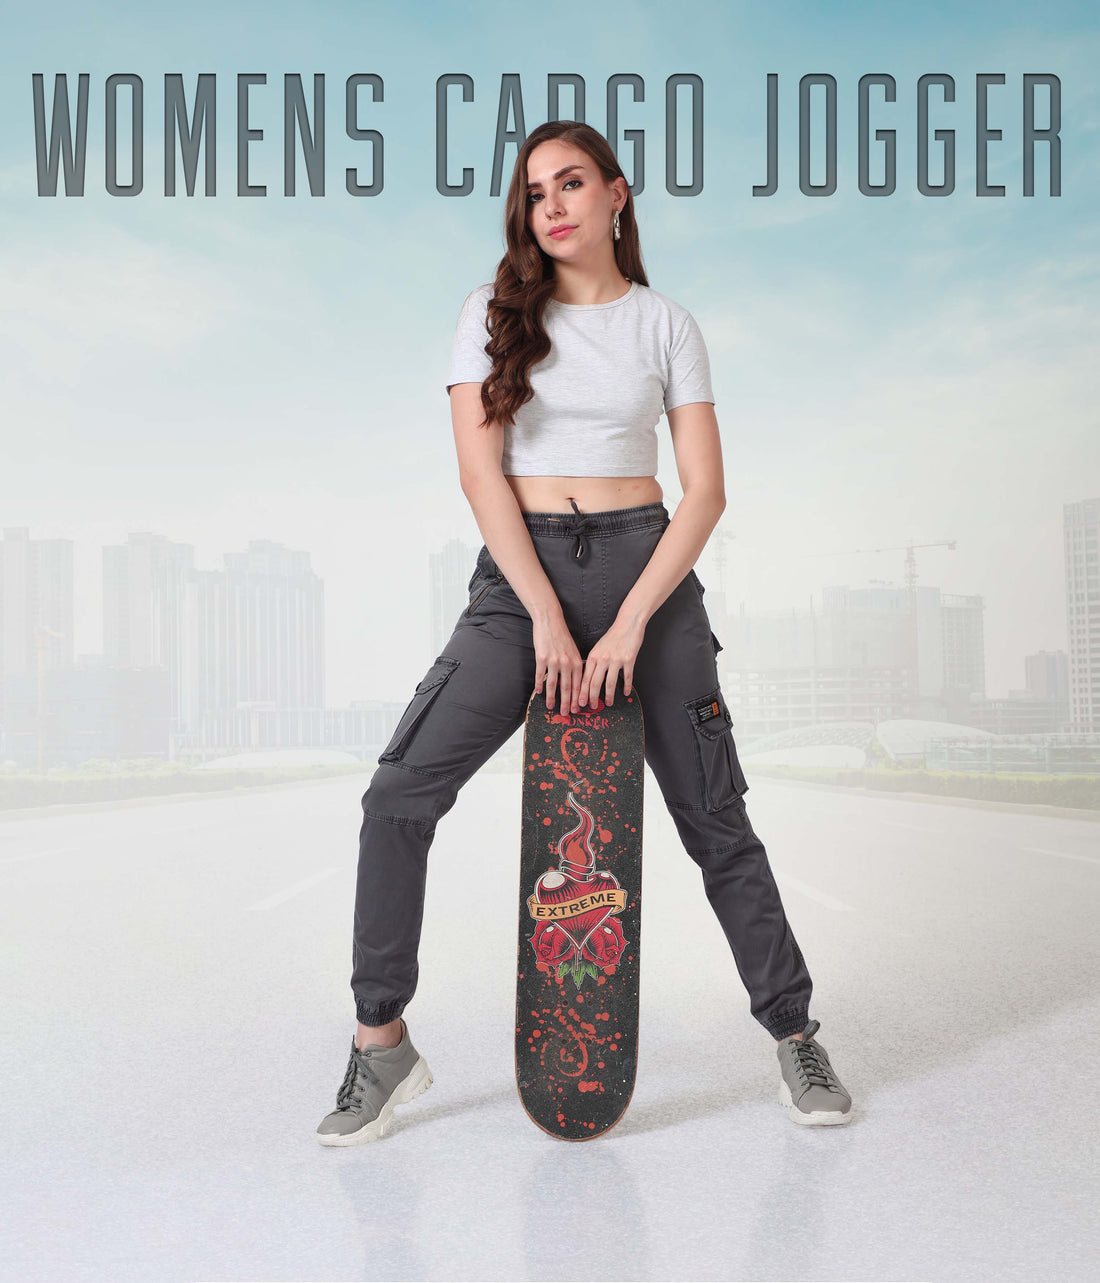  Women Cargo Joggers